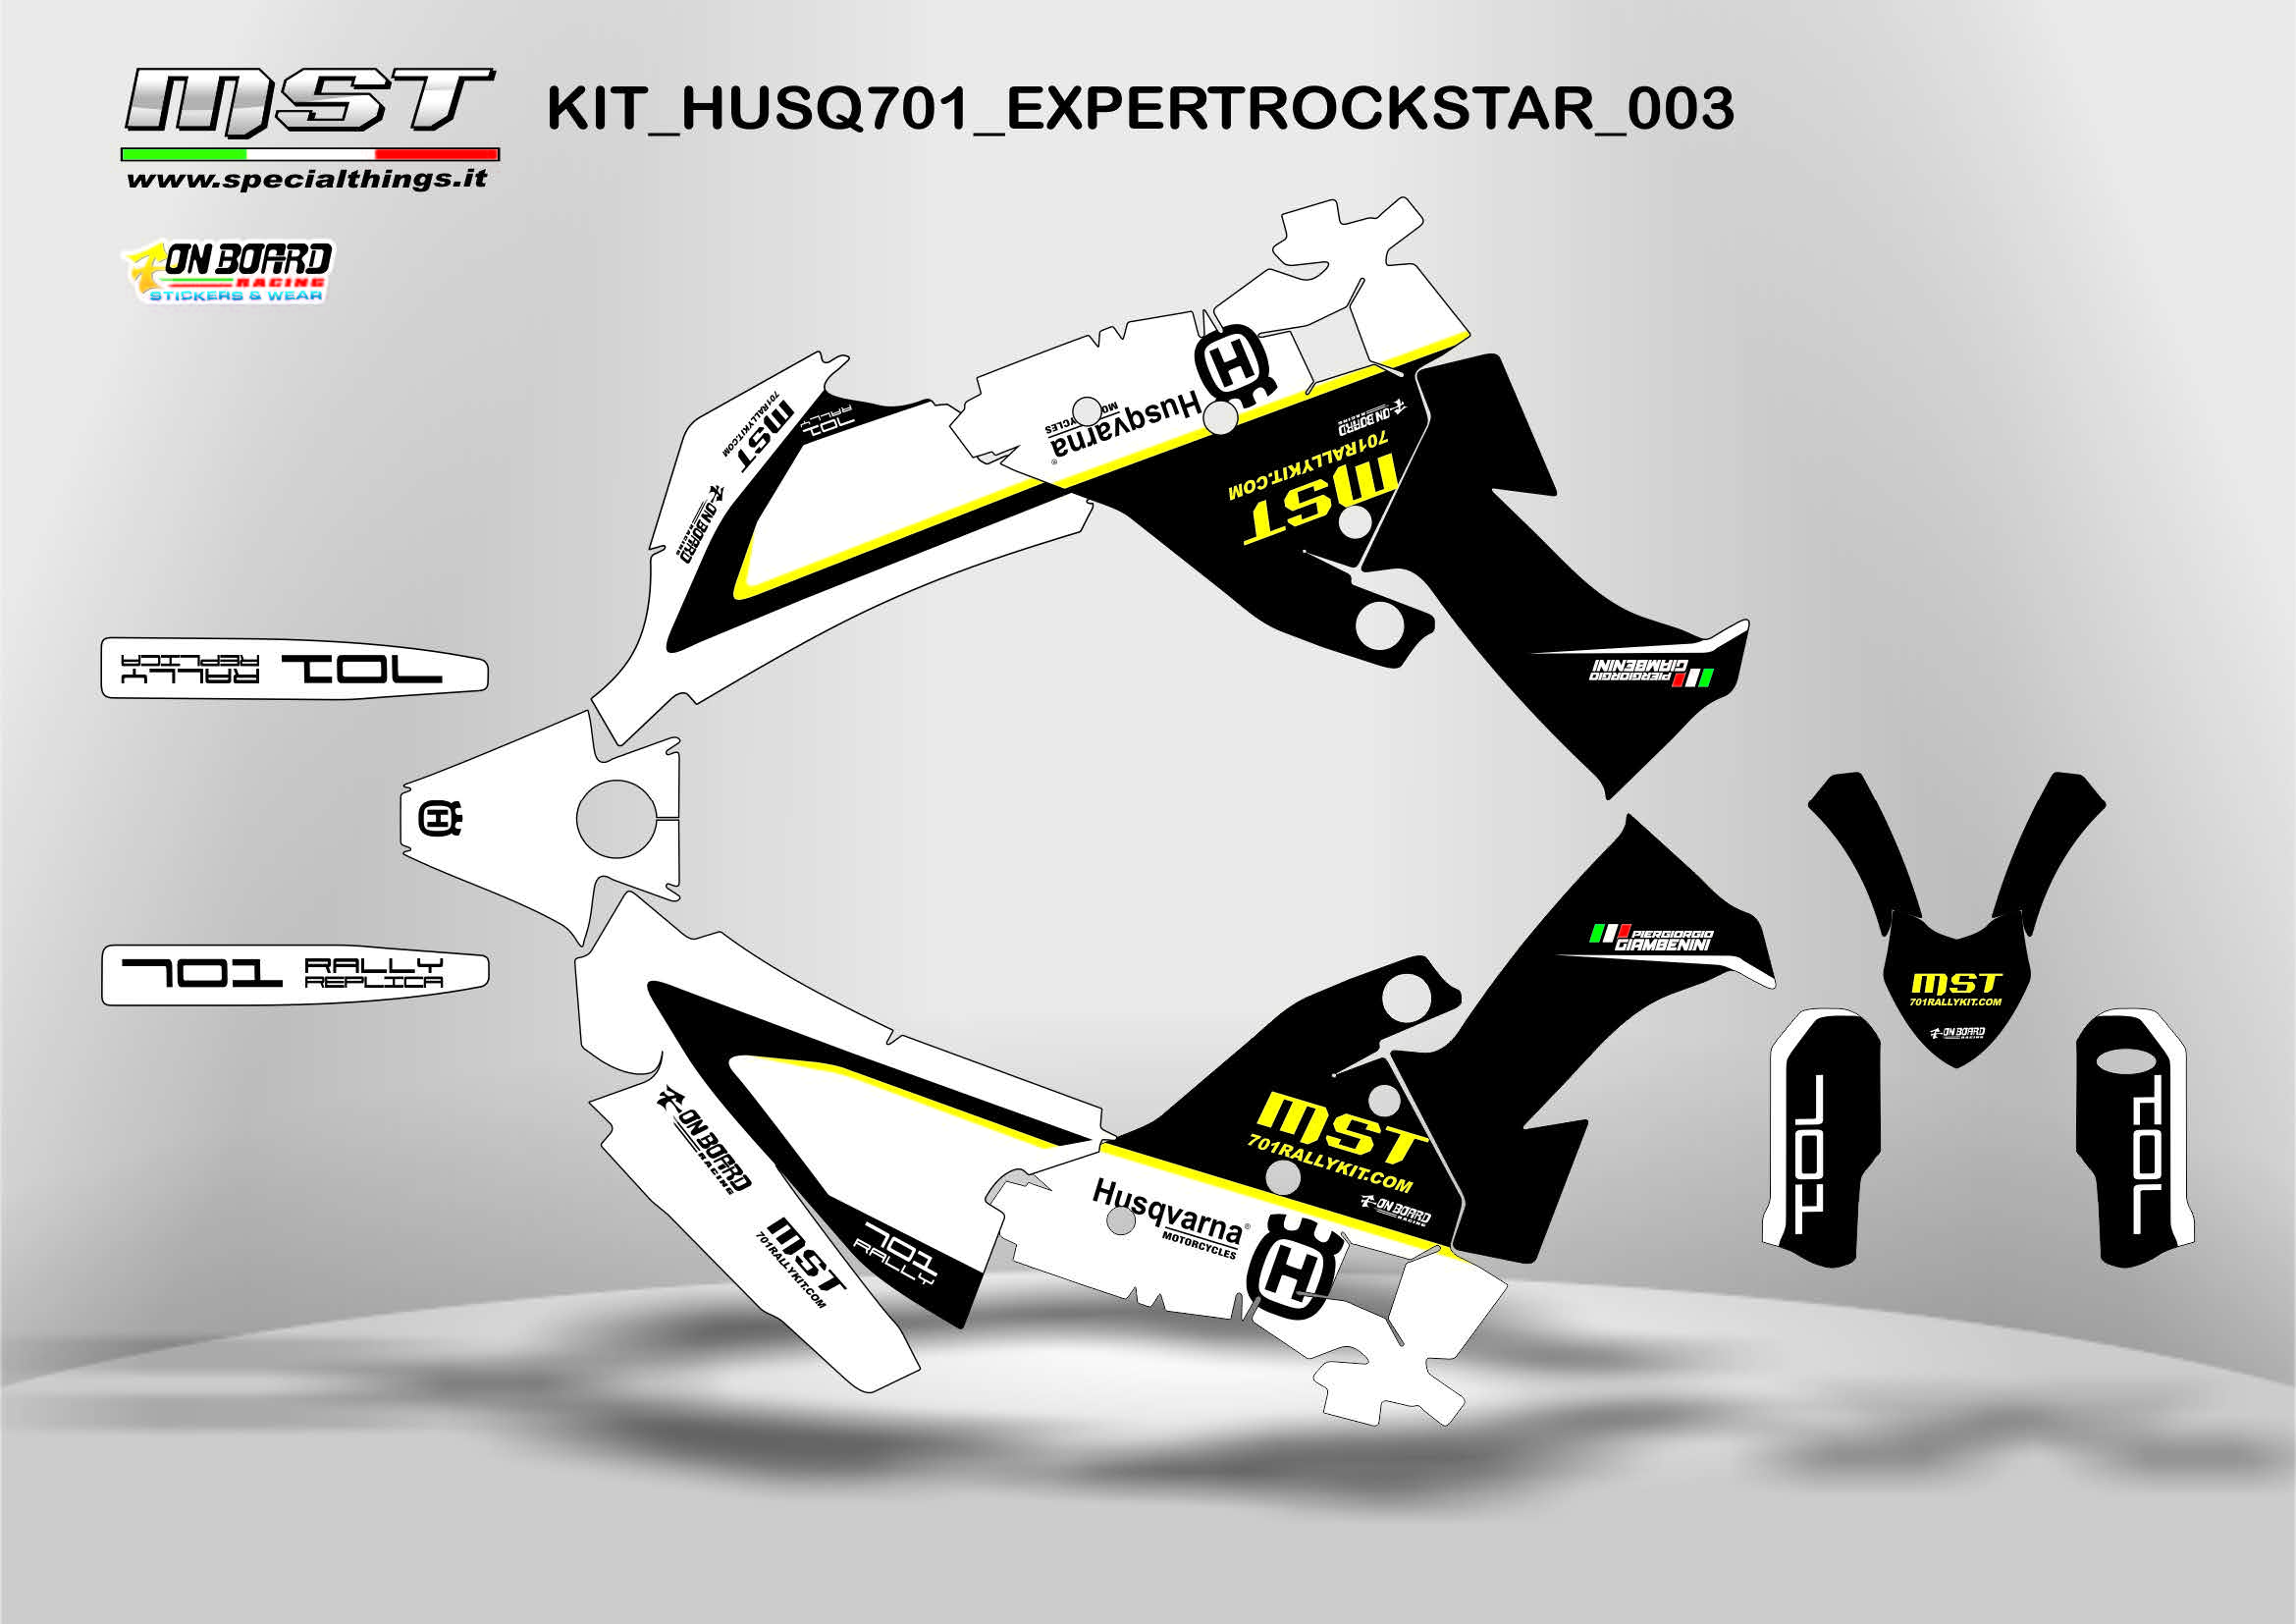 Husqvarna 701 Enduro Dirt Bike Diskovery Graphic Kit Green - Kutvek Kit  Graphik